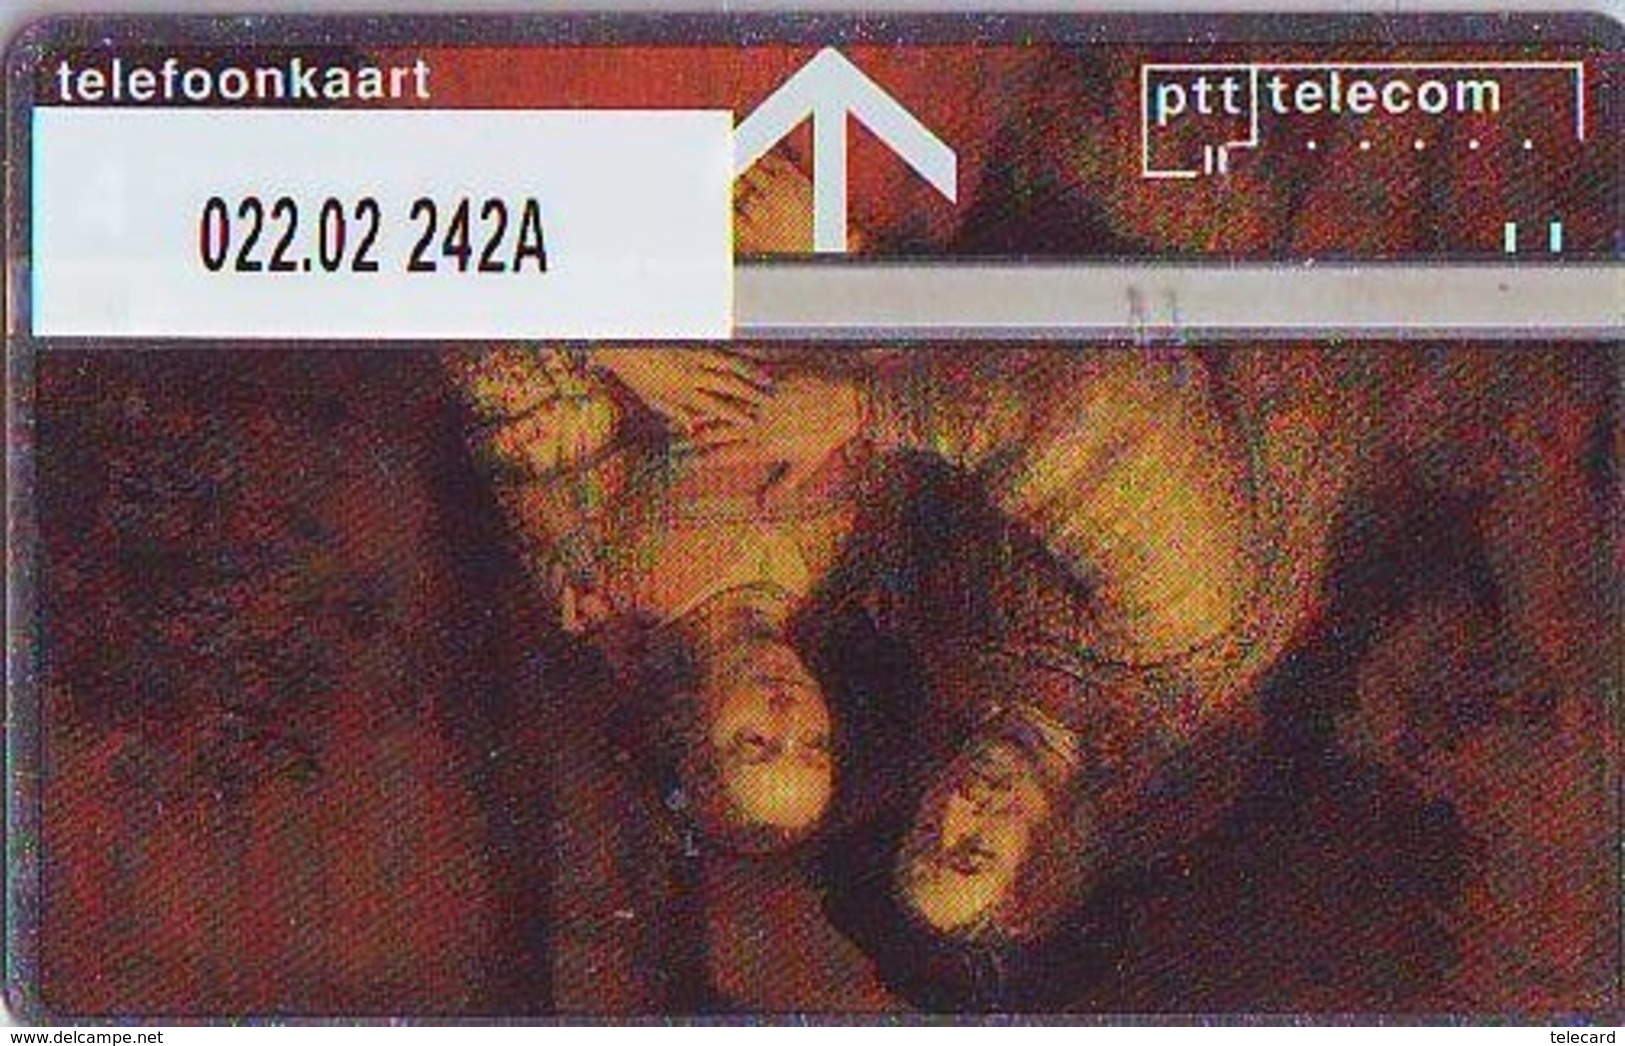 Telefoonkaart * LANDIS&GYR * NEDERLAND *  REMBRANDT SERIE R-022.01-03 * Niederlande Prive Private  ONGEBRUIKT * MINT - Privé